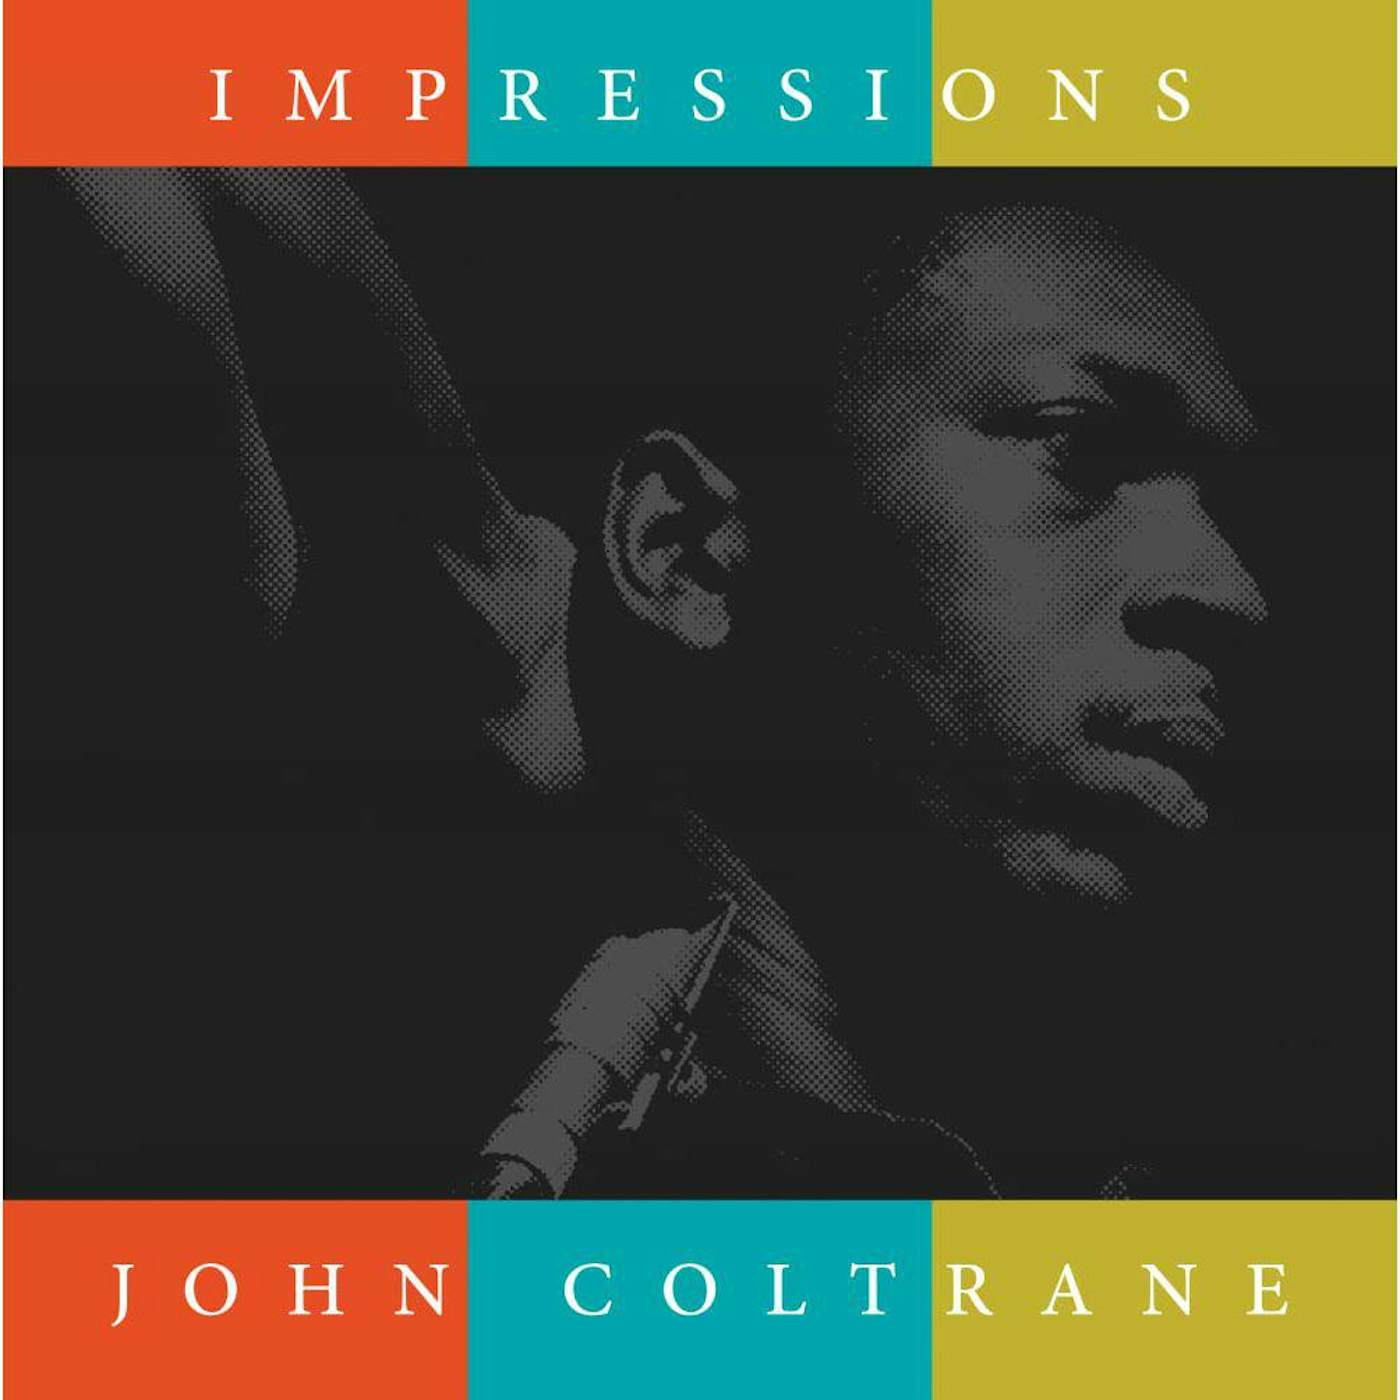 John Coltrane IMPRESSIONS Vinyl Record